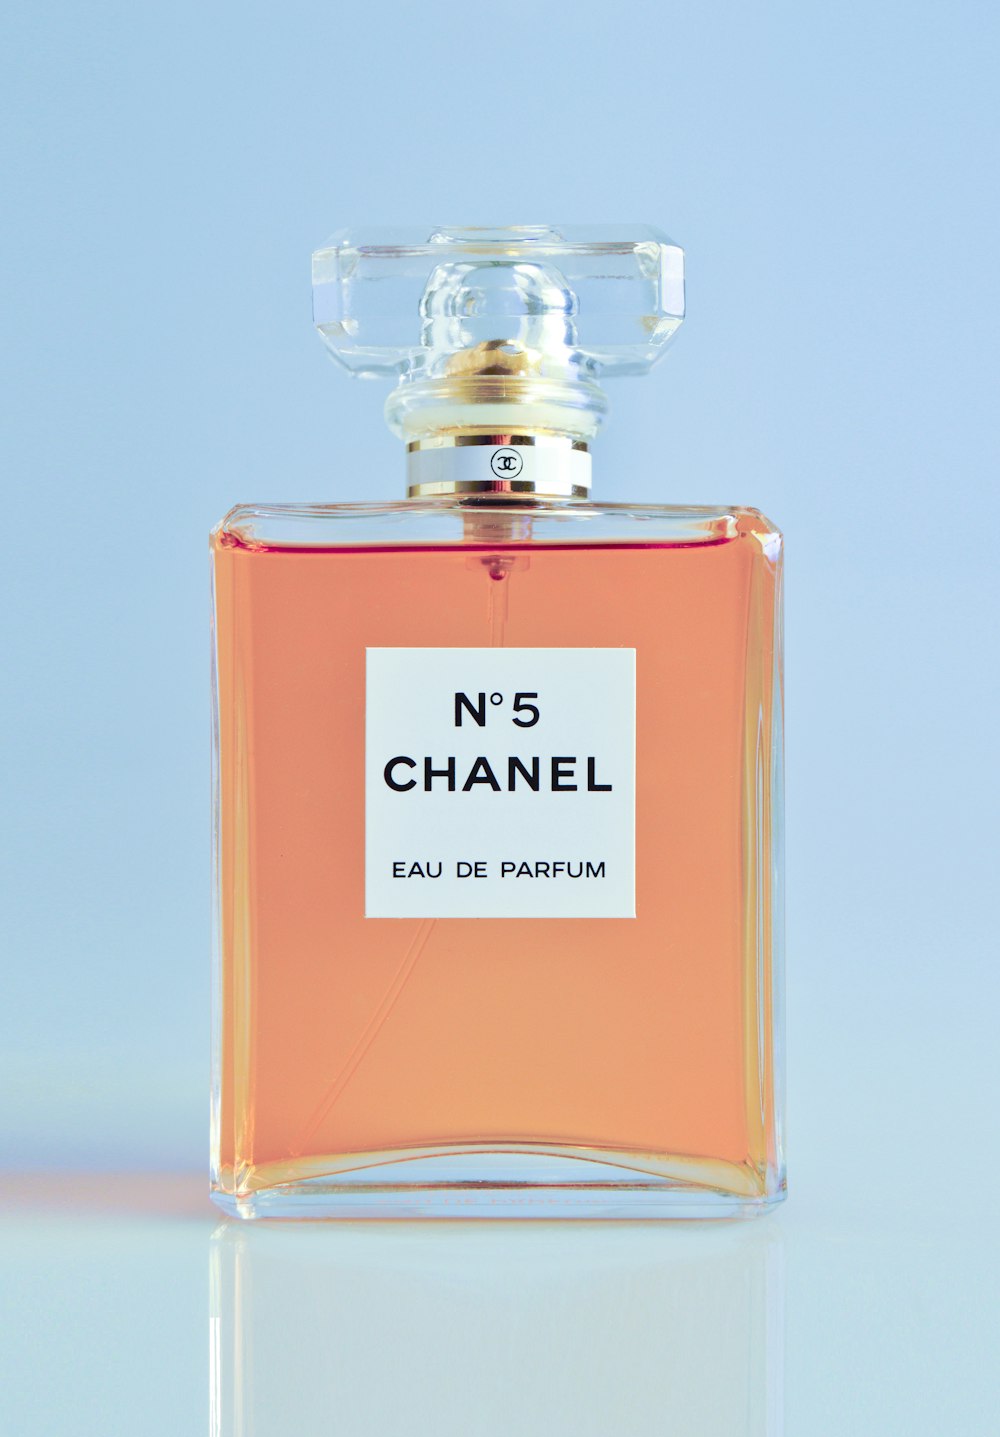 Bleu De Chanel Fragrance For Men High-Res Stock Photo - Getty Images